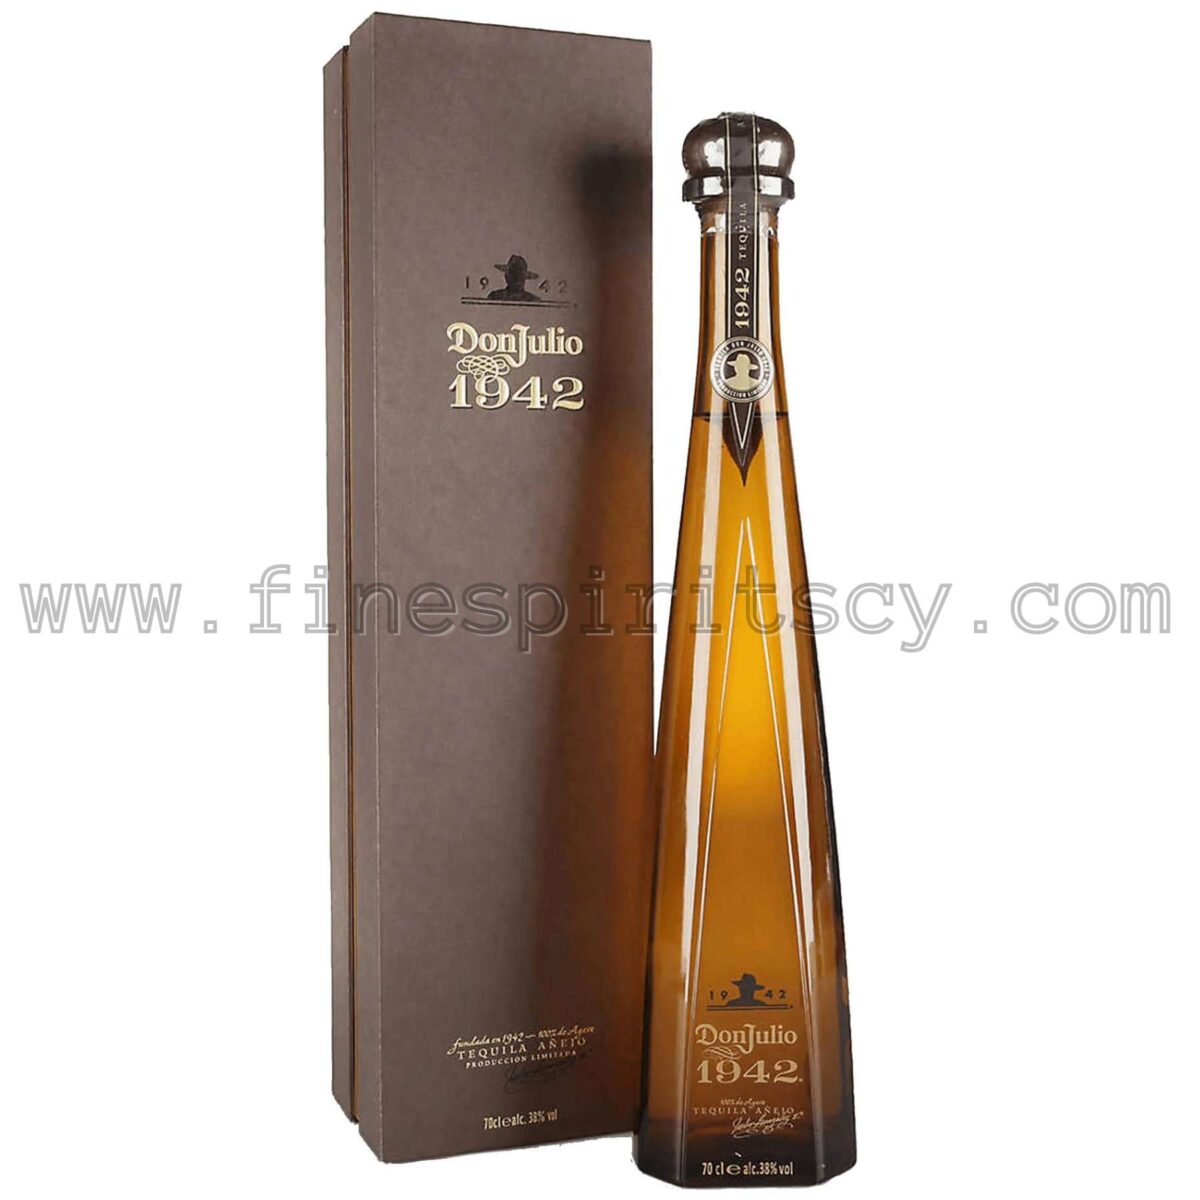 Don Julio 1942 700ml 70cl 0.7L Price Cyprus Anejo Tequila FSCY Online Order